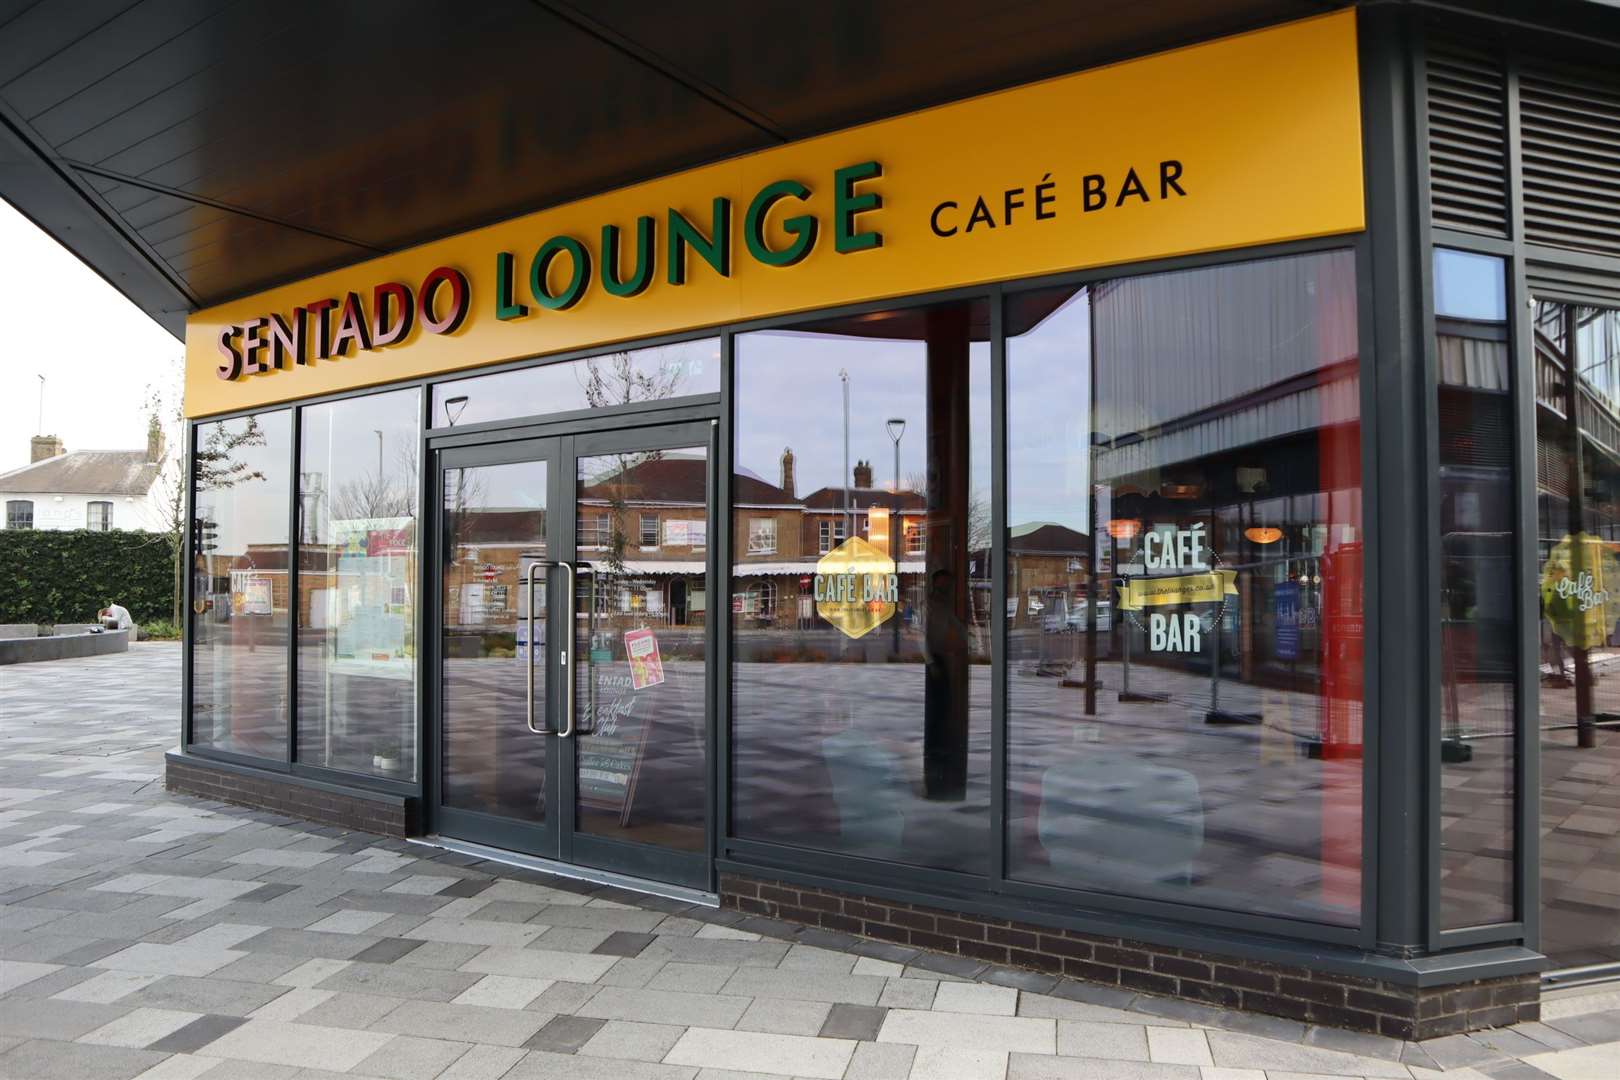 New Sentado Lounge restraurant in Sittingbourne town centre. Picture: John Nurden (47584670)